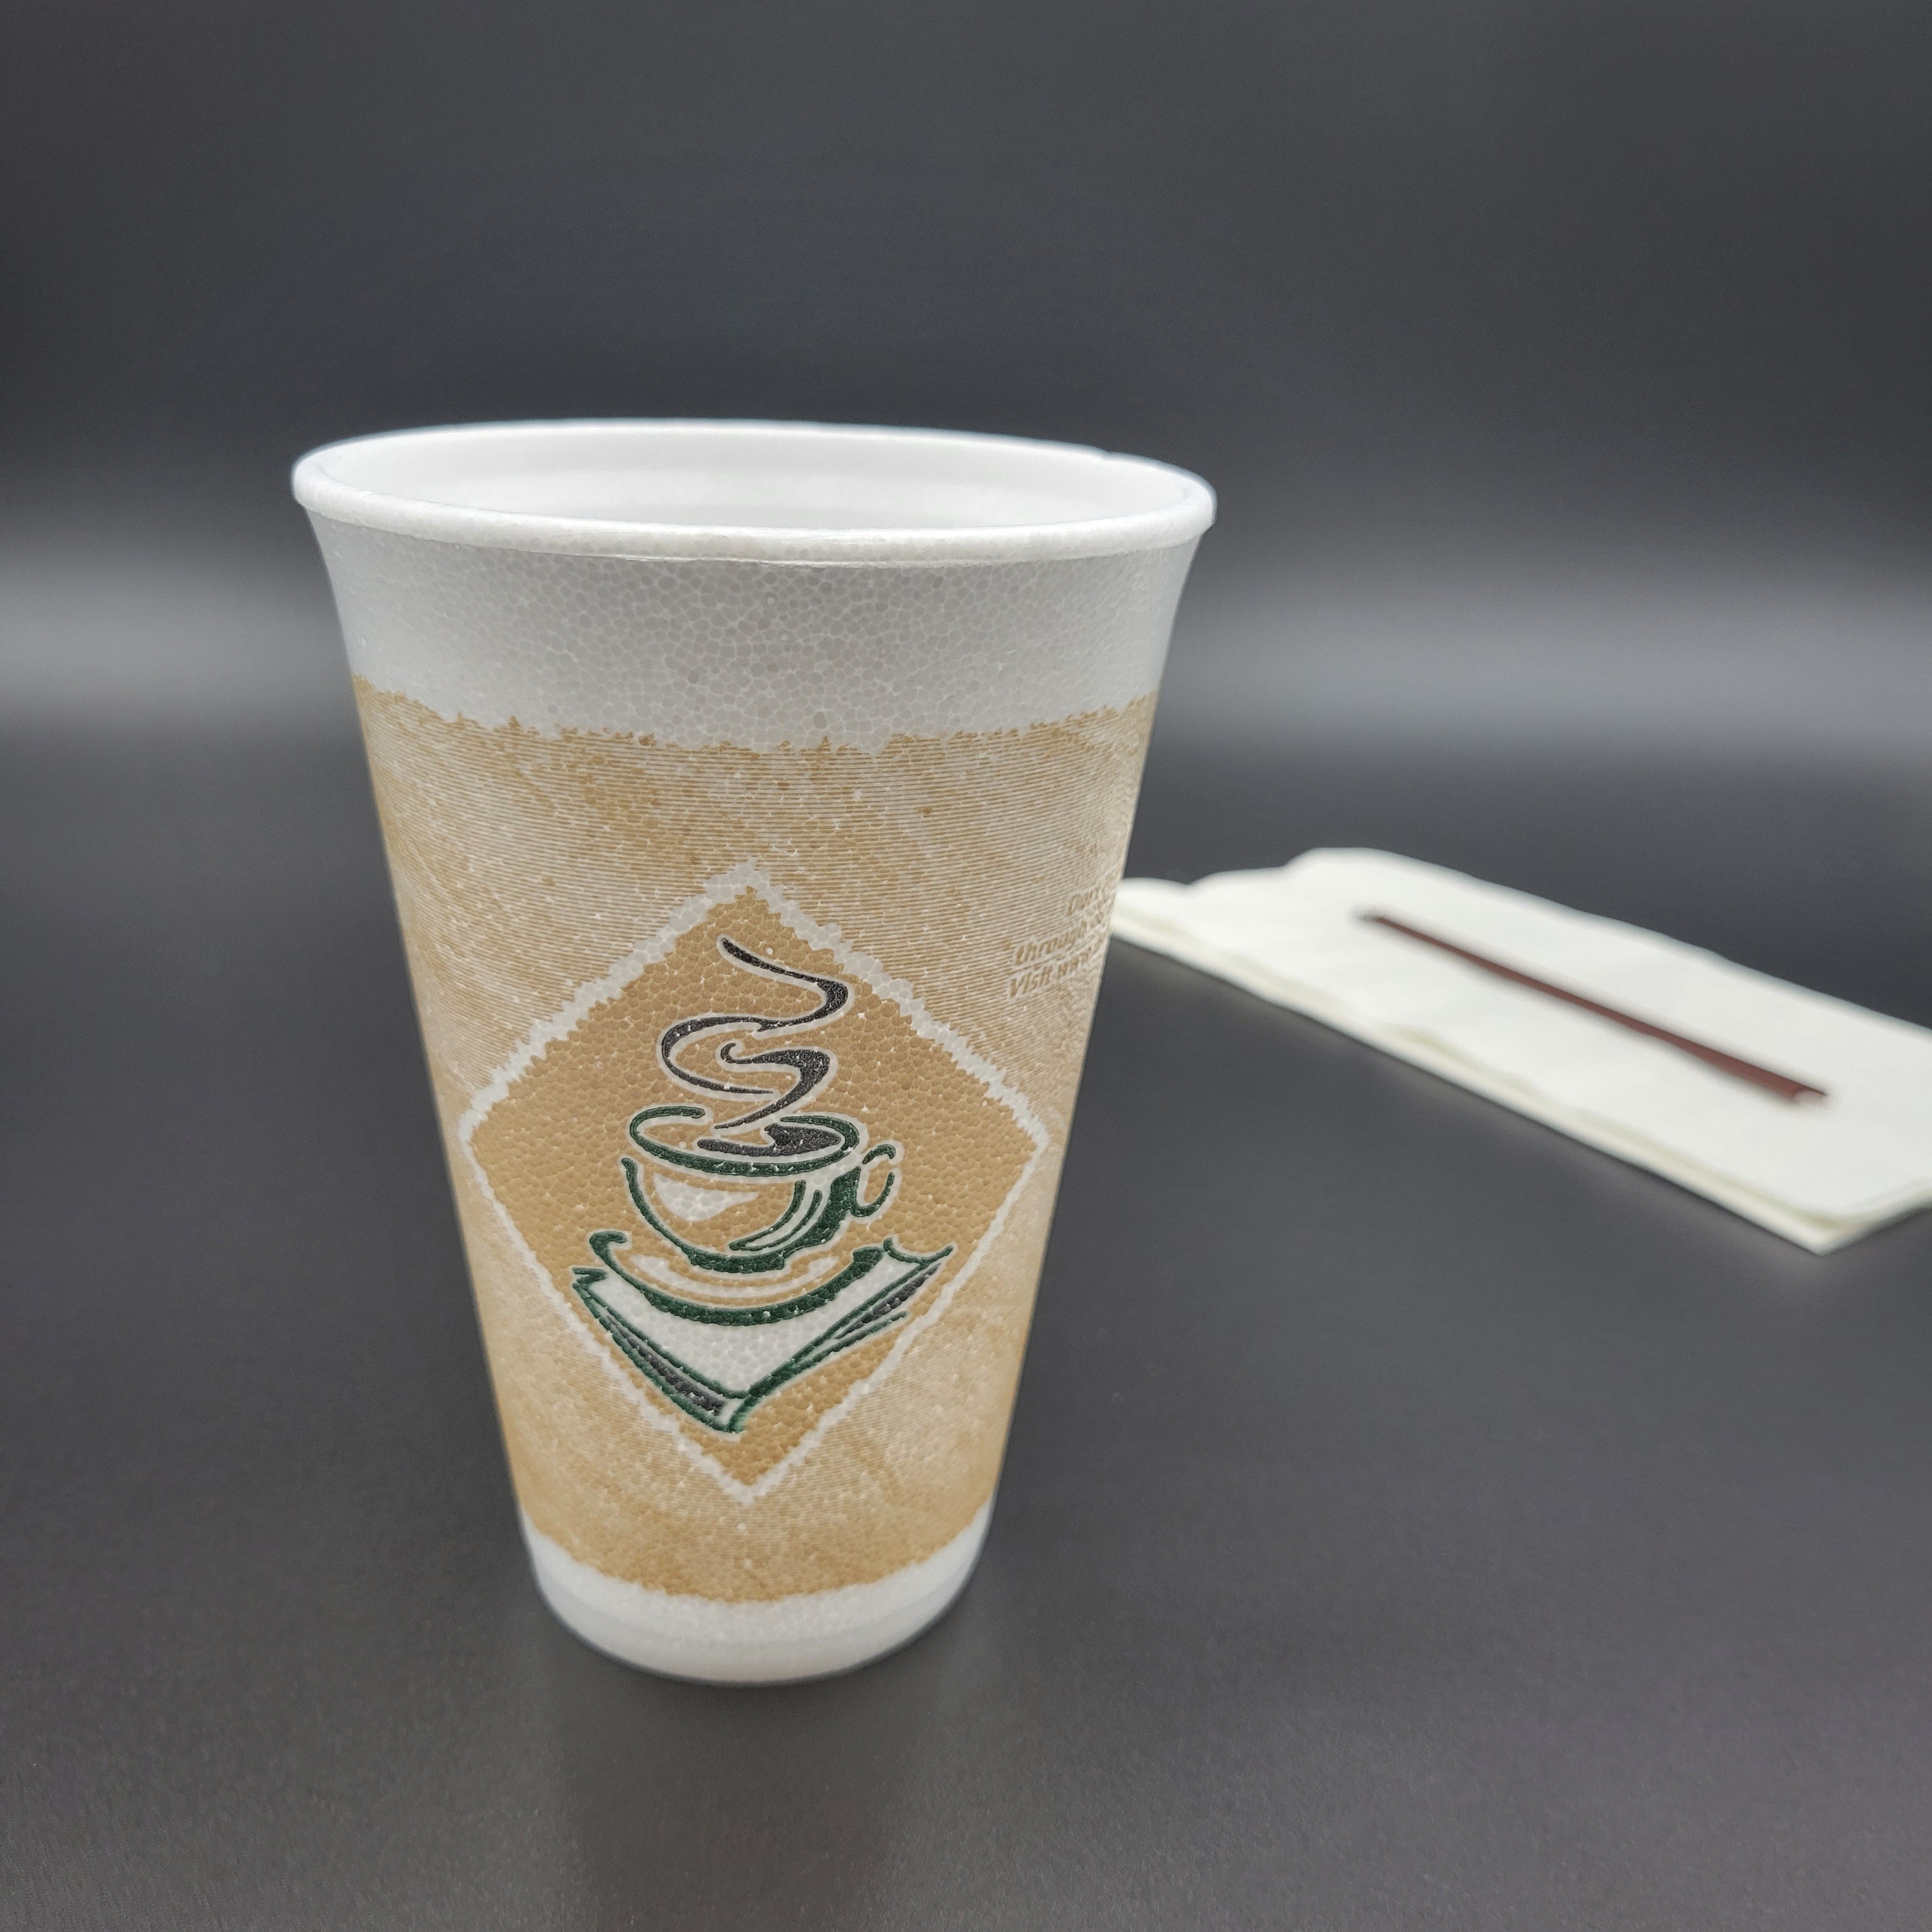 Dart Mfg. Foam Coffee Cup "Café G" Print 16 oz. 16X16G - 1000/Case